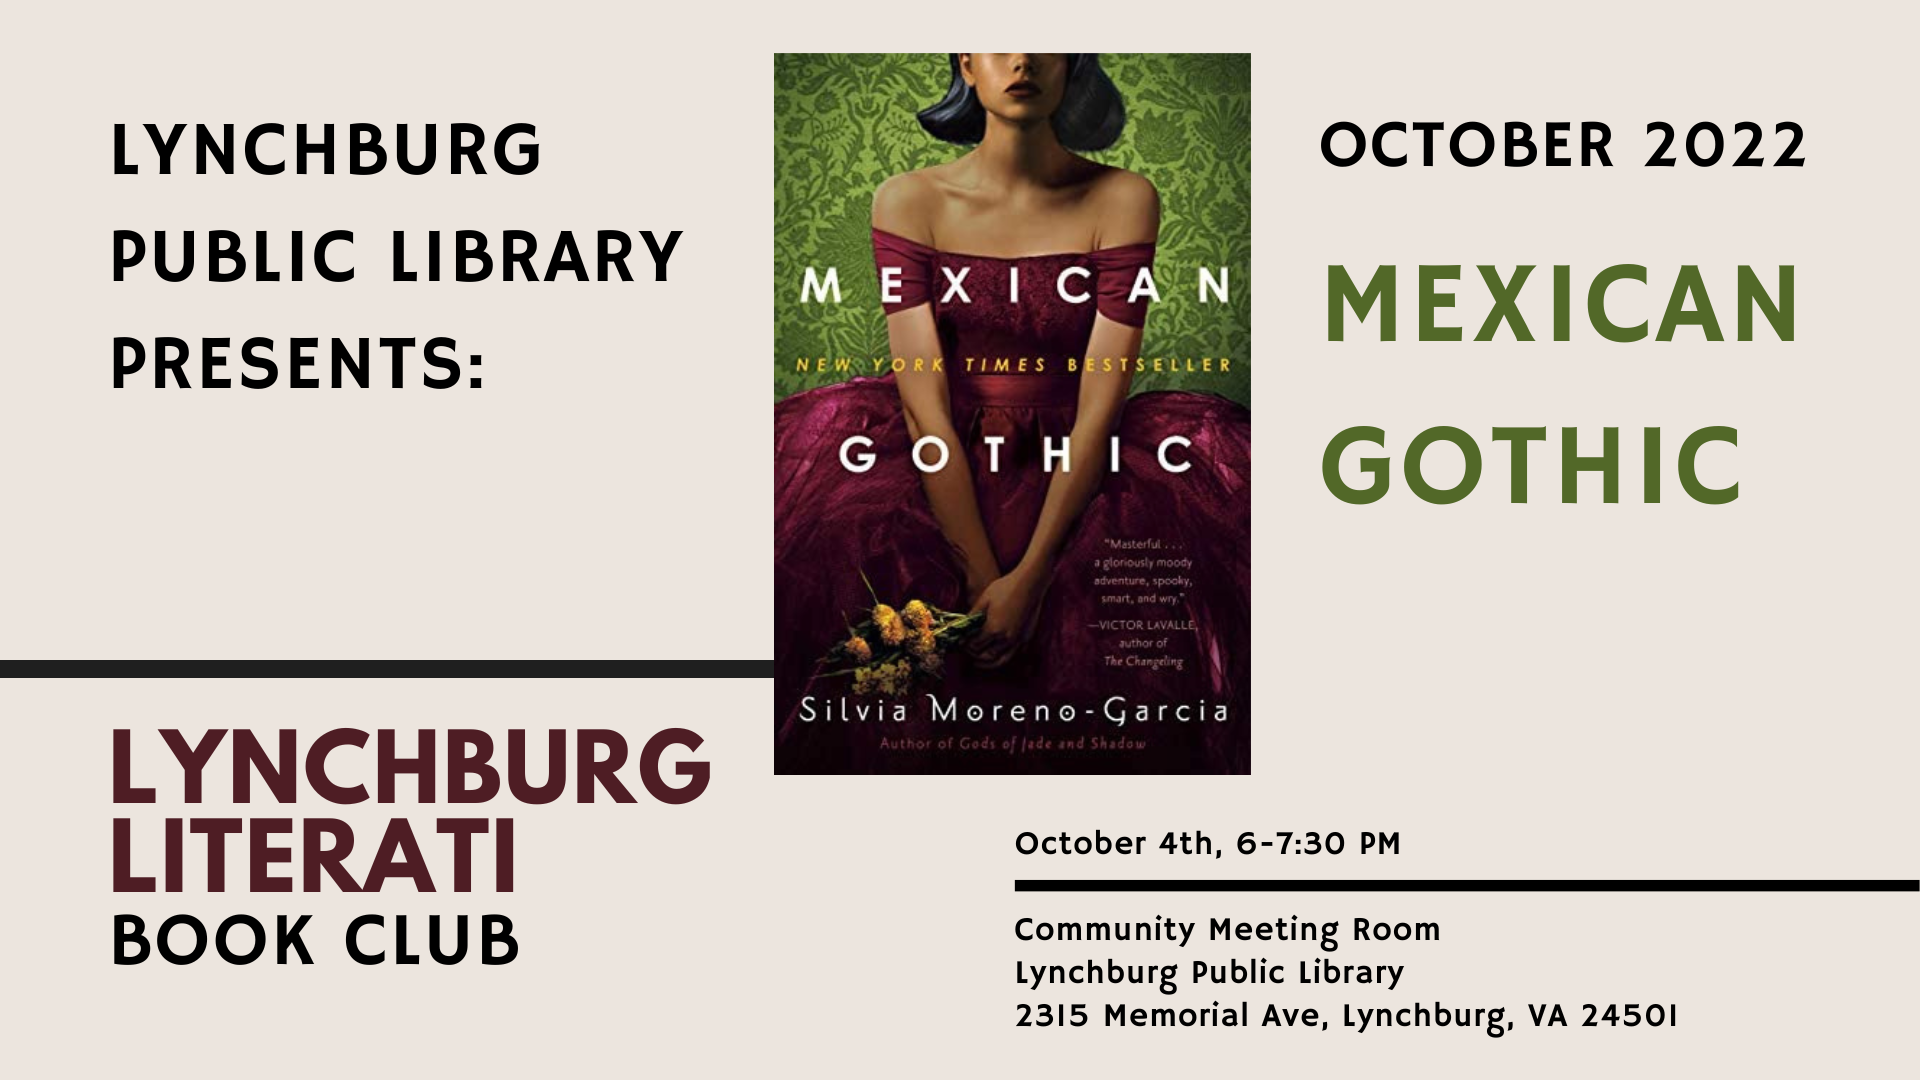 Lynchburg Public Library Presents Lynchburg LIterati Book Club; October 2022, Mexican Gothic; October 4th, 6-7:30 PM; Community Meeting Room, Lynchburg Public Library, 2315 Memorial Ave, Lynchburg, VA 24501